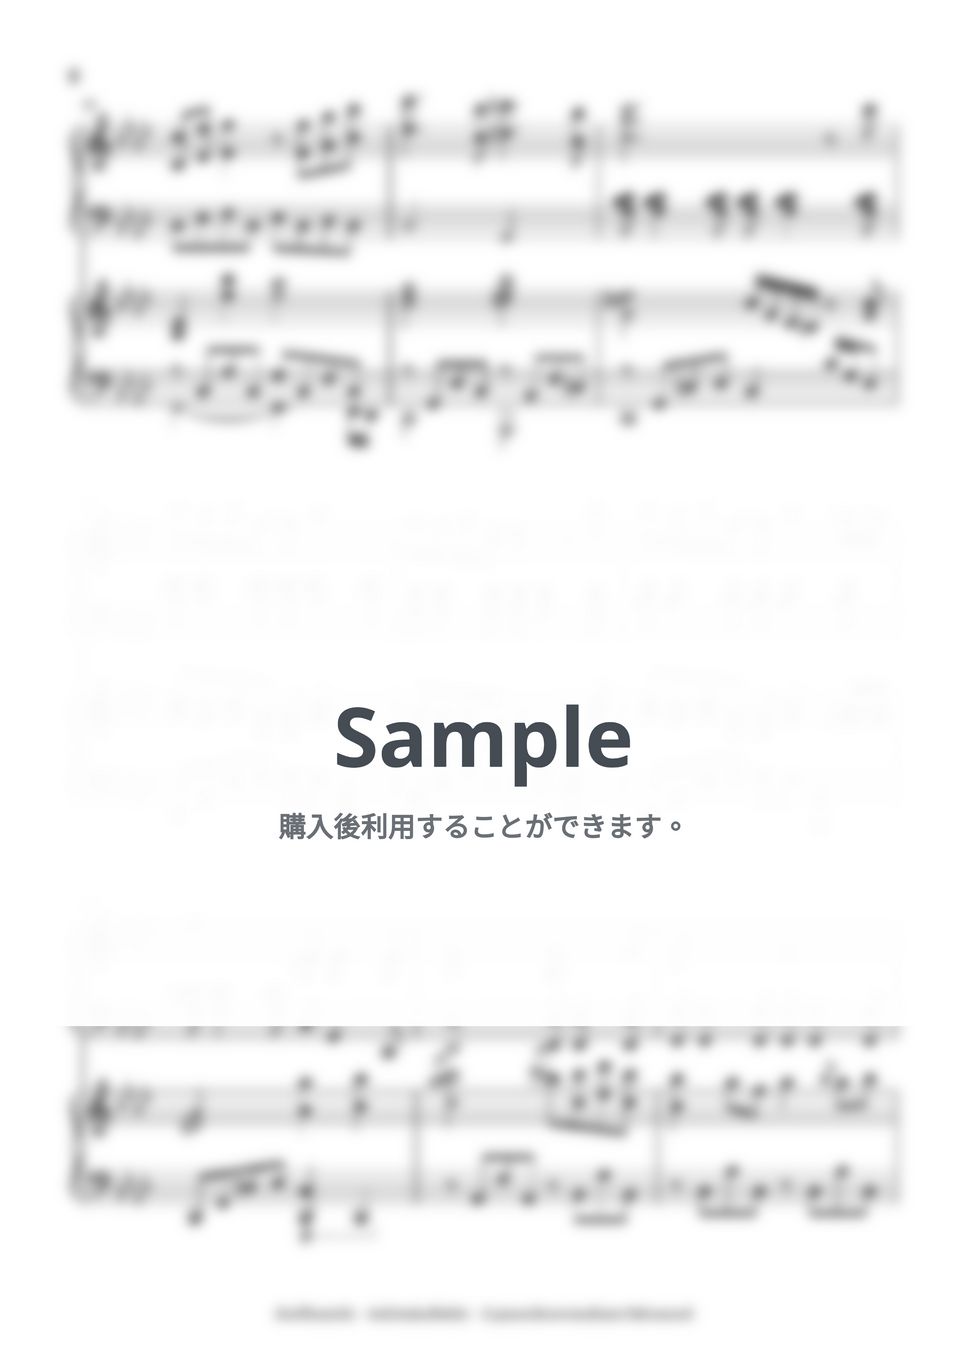 Joe Hisaishi - The Legend of Ashitaka Ending (intermediate to advanced, 2-piano) by Mopianic